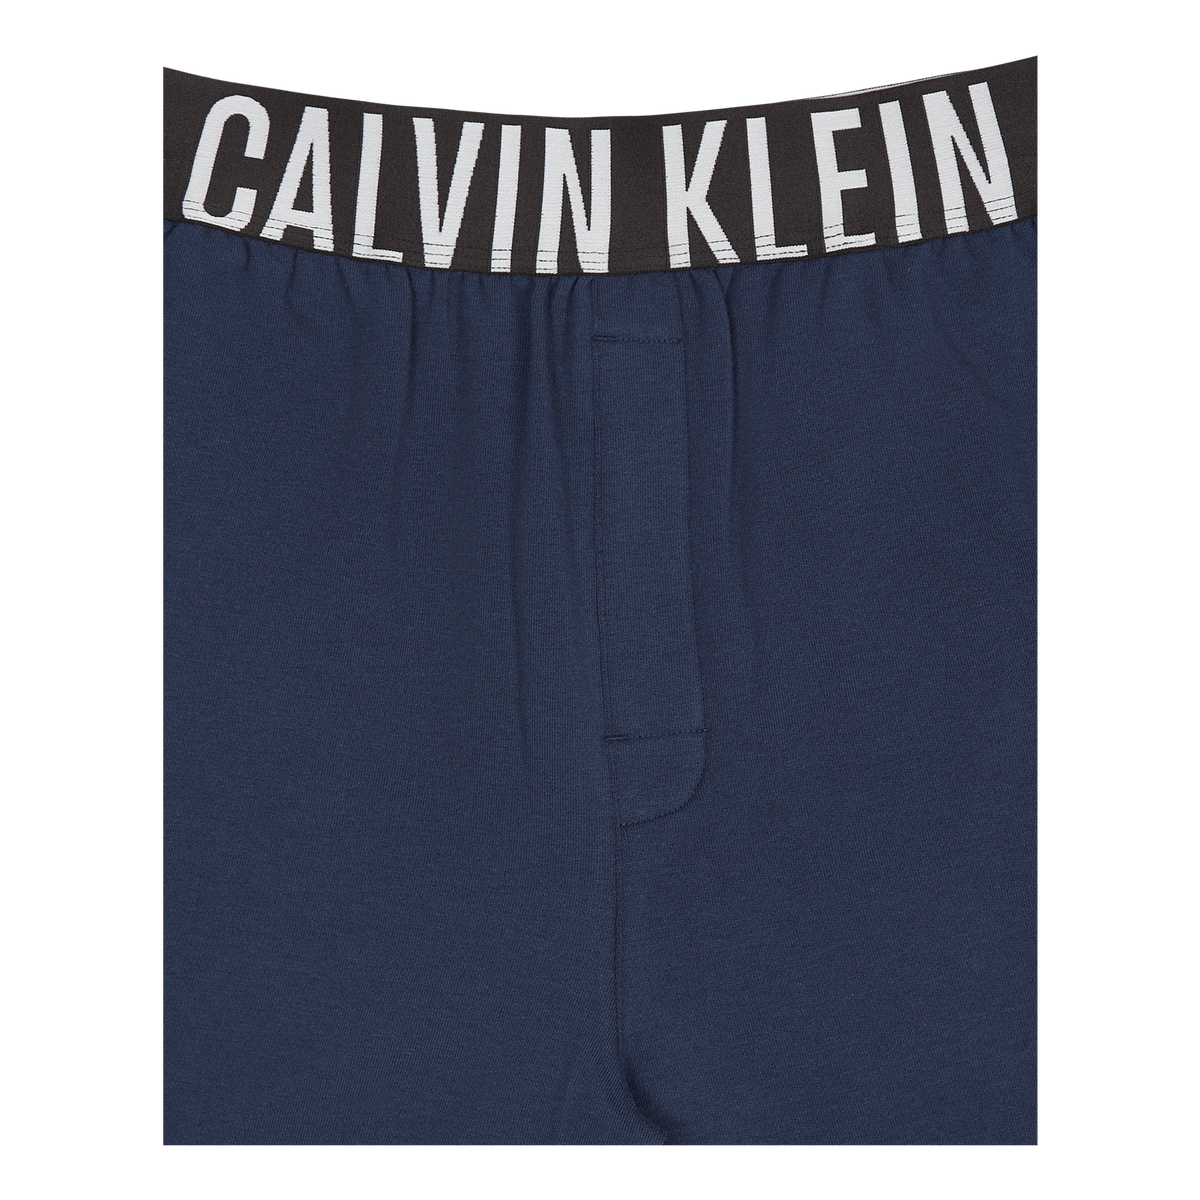 Calvin Klein Sleep Short 8sb - Blue Shadow W/ White